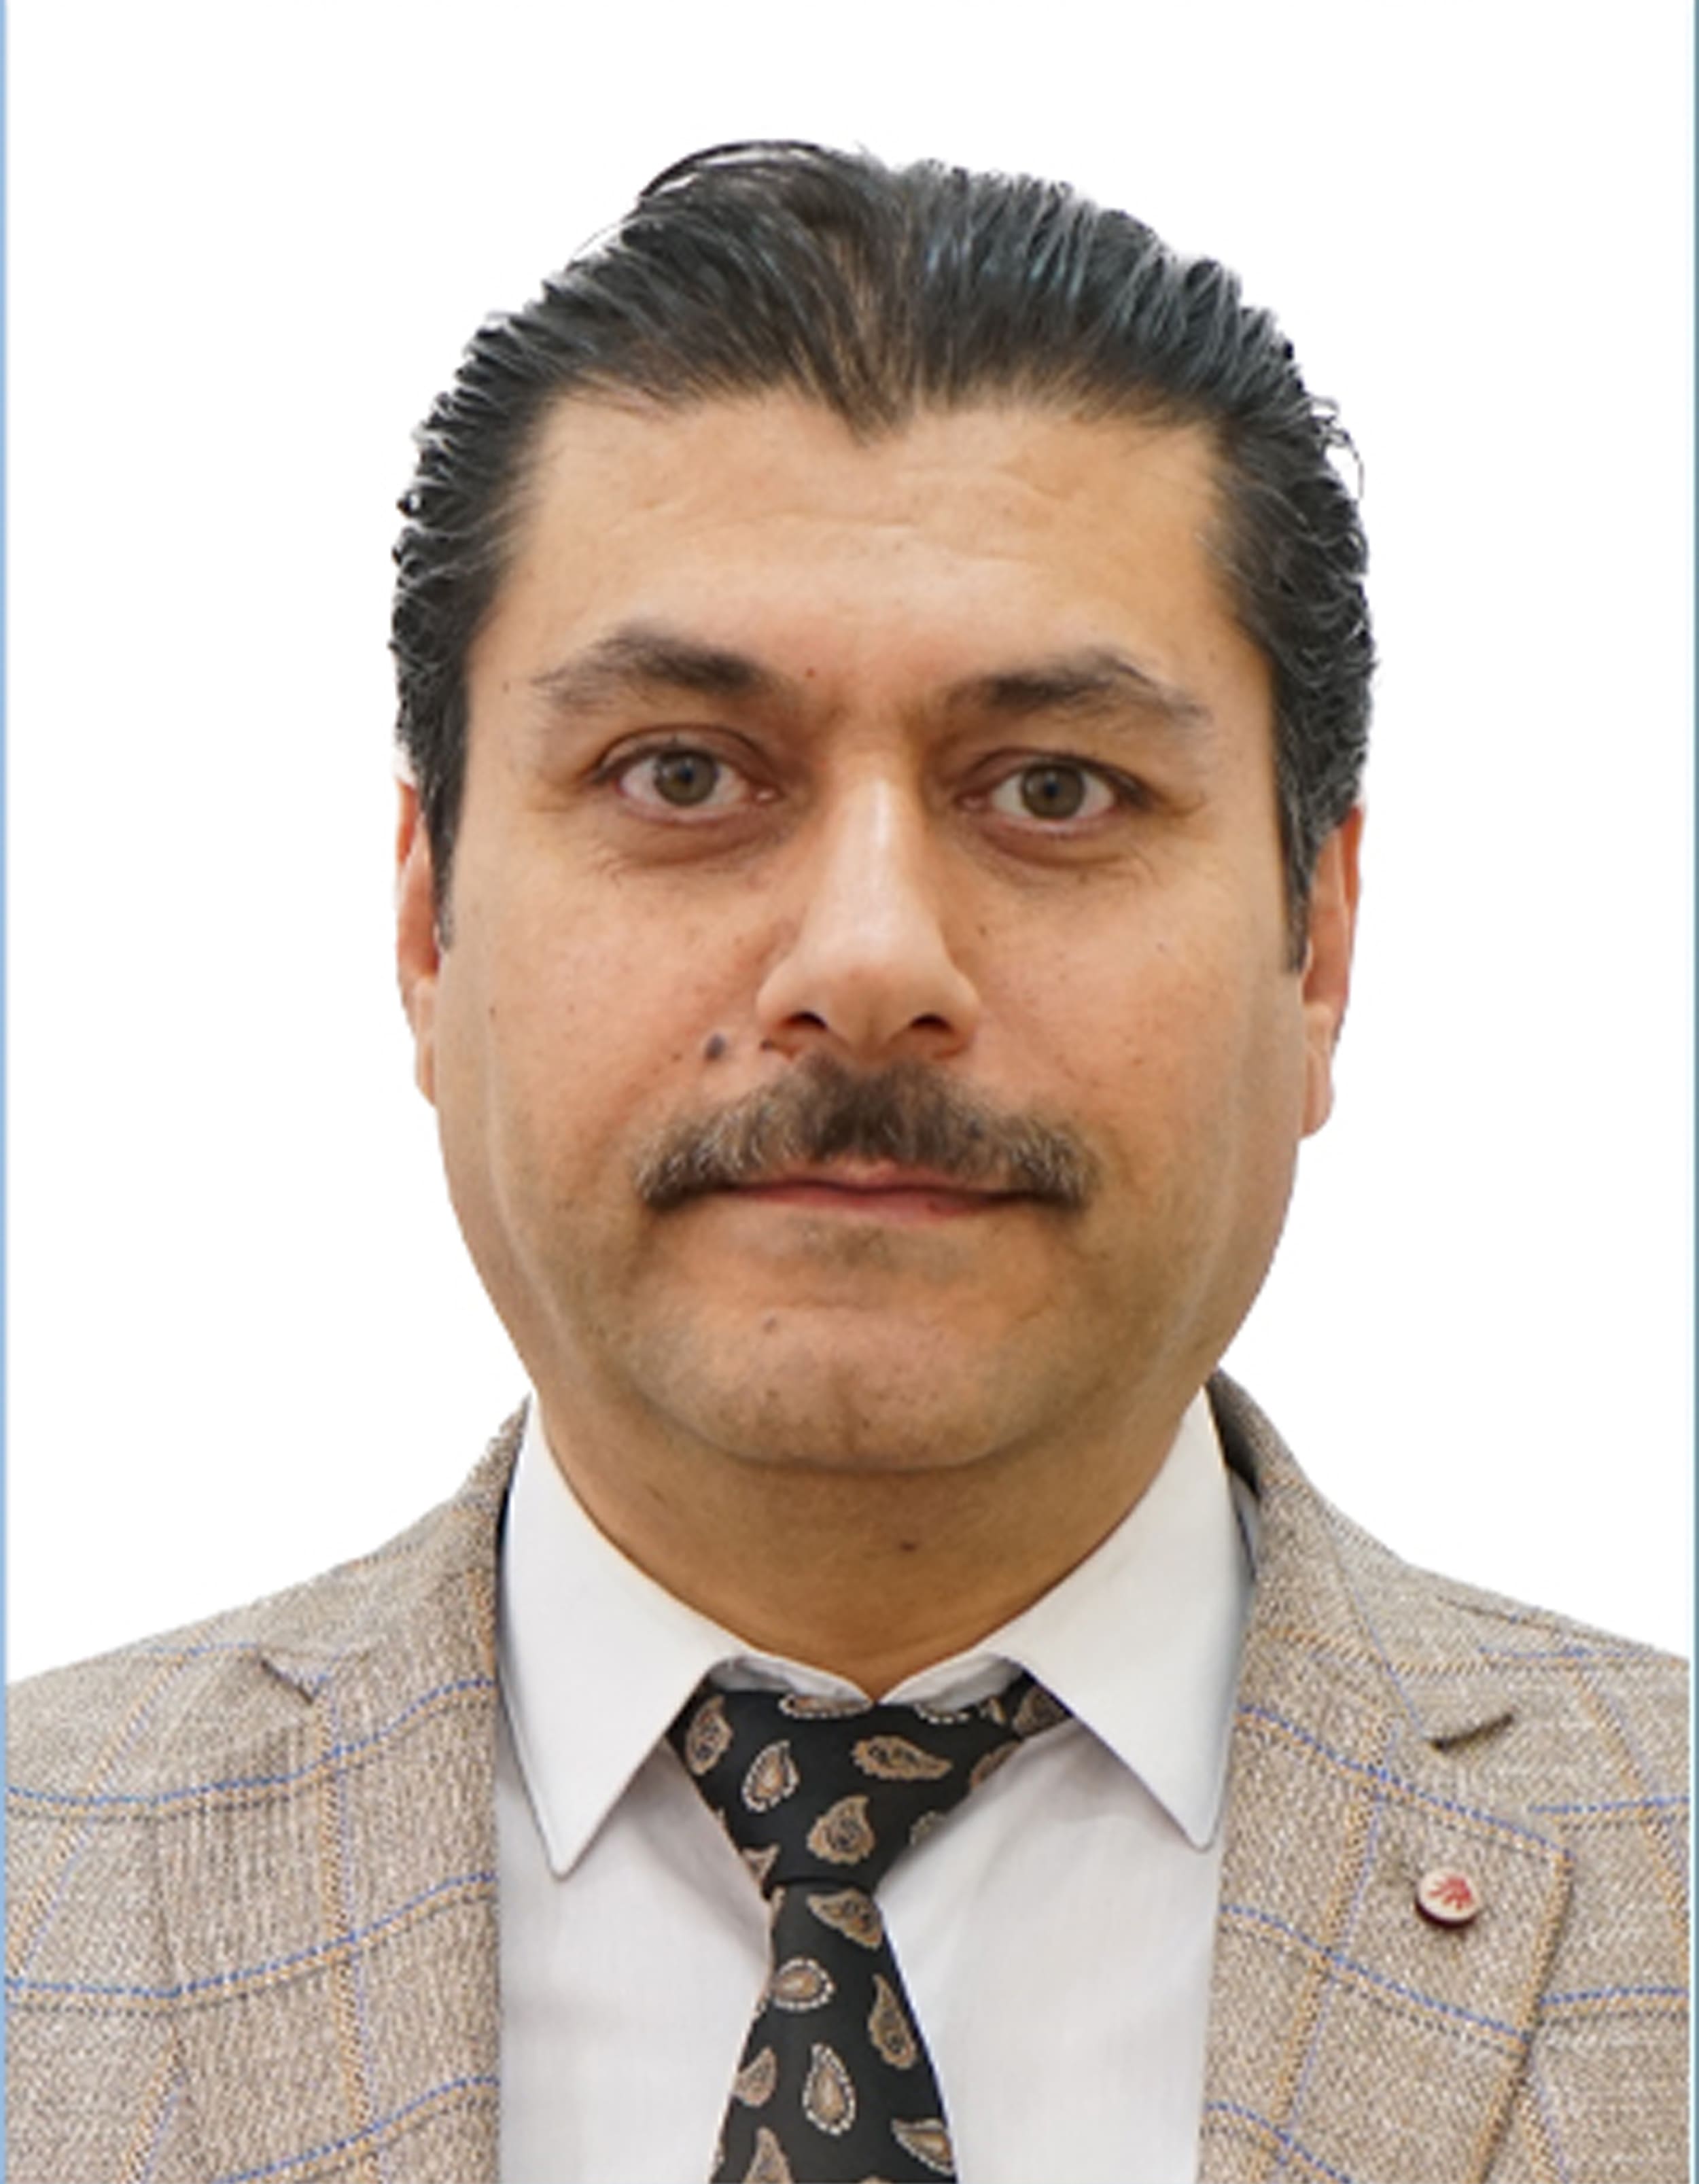 Amjad Hamad Abdullah, Staff at Knowledge